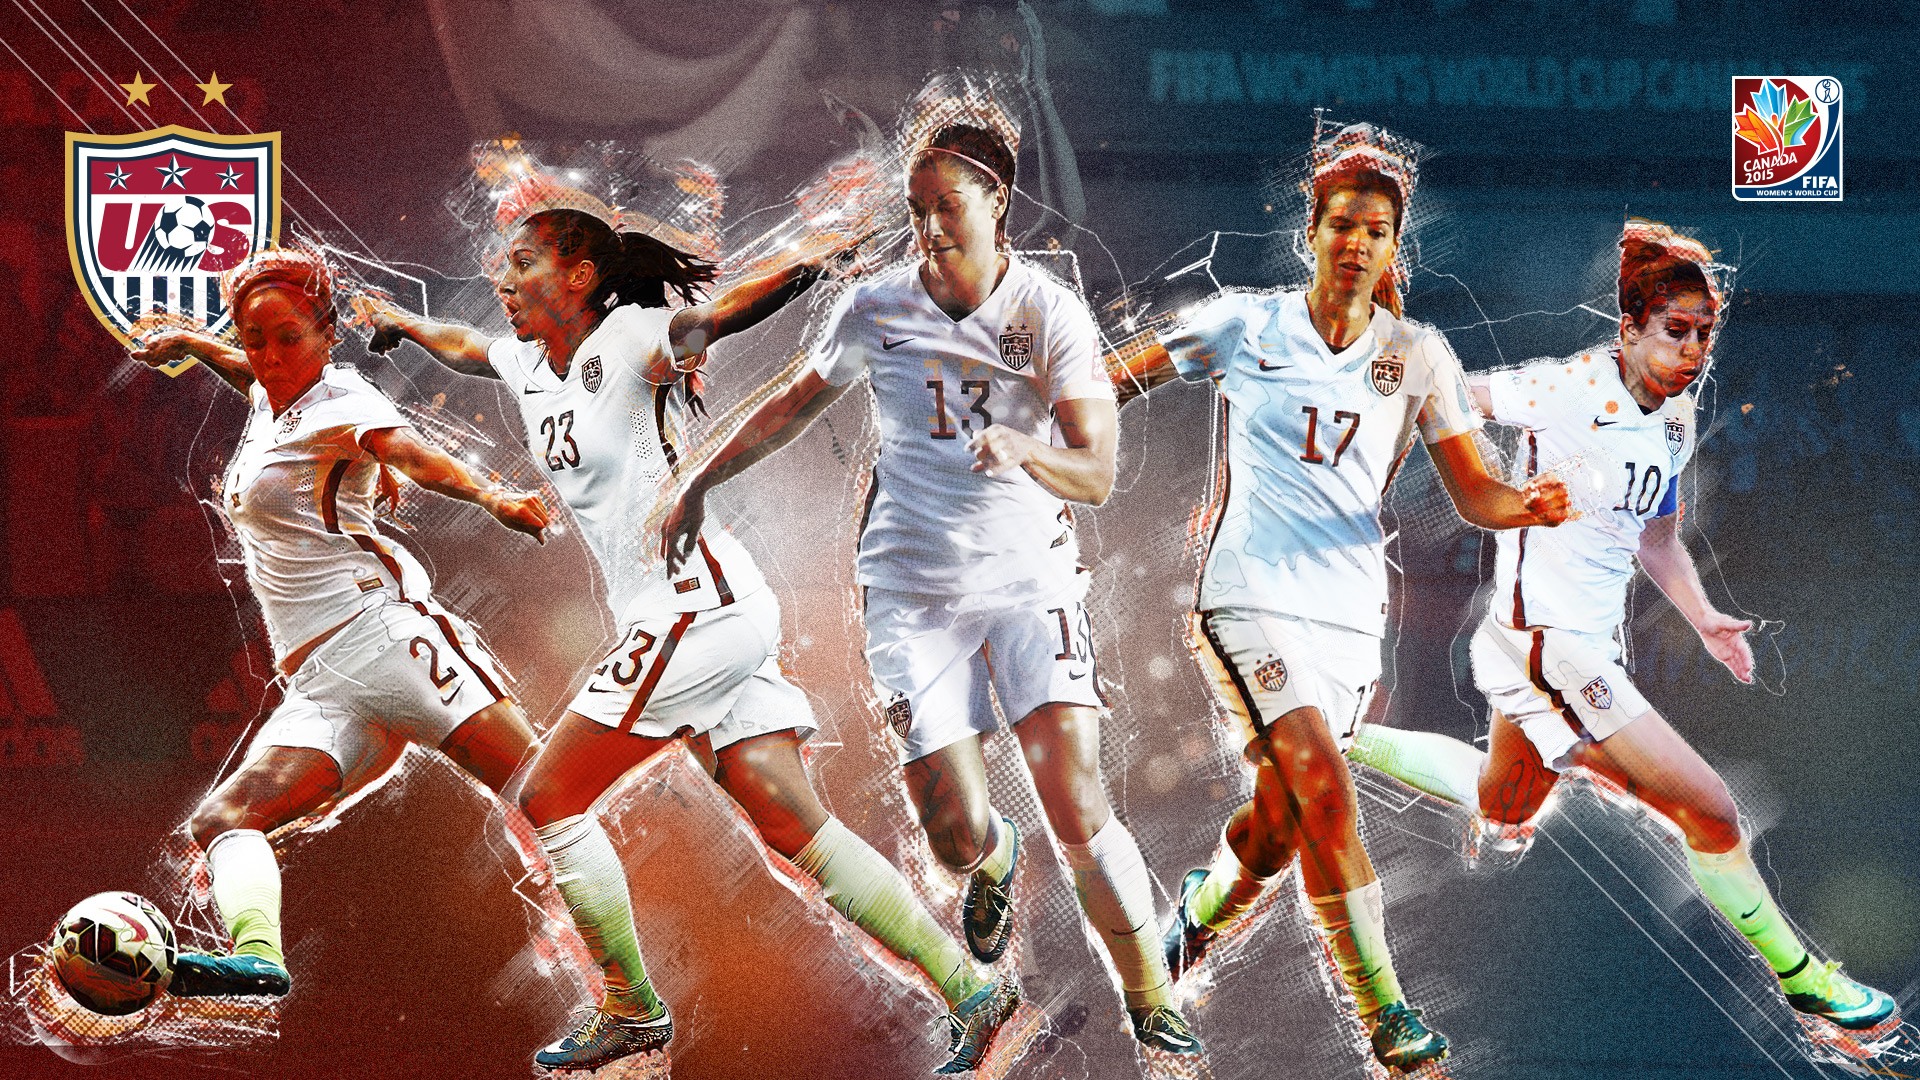 Women's World Cup 2015 Final, USA vs Japan Live updates as USA wins